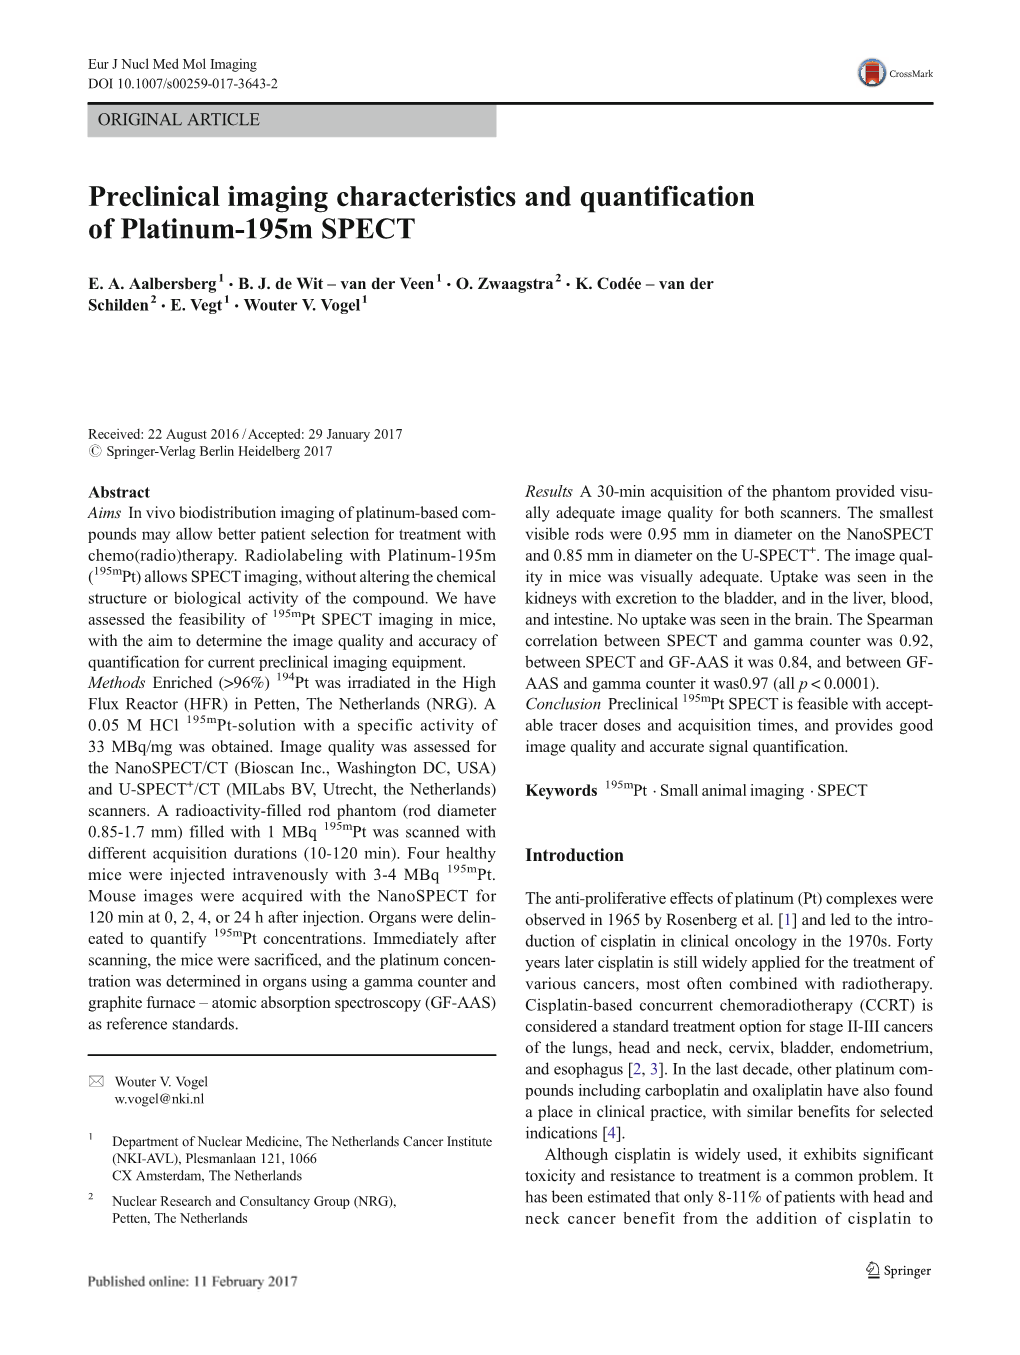 Preclinical Imaging Characteristics and Quantification of Platinum-195M SPECT